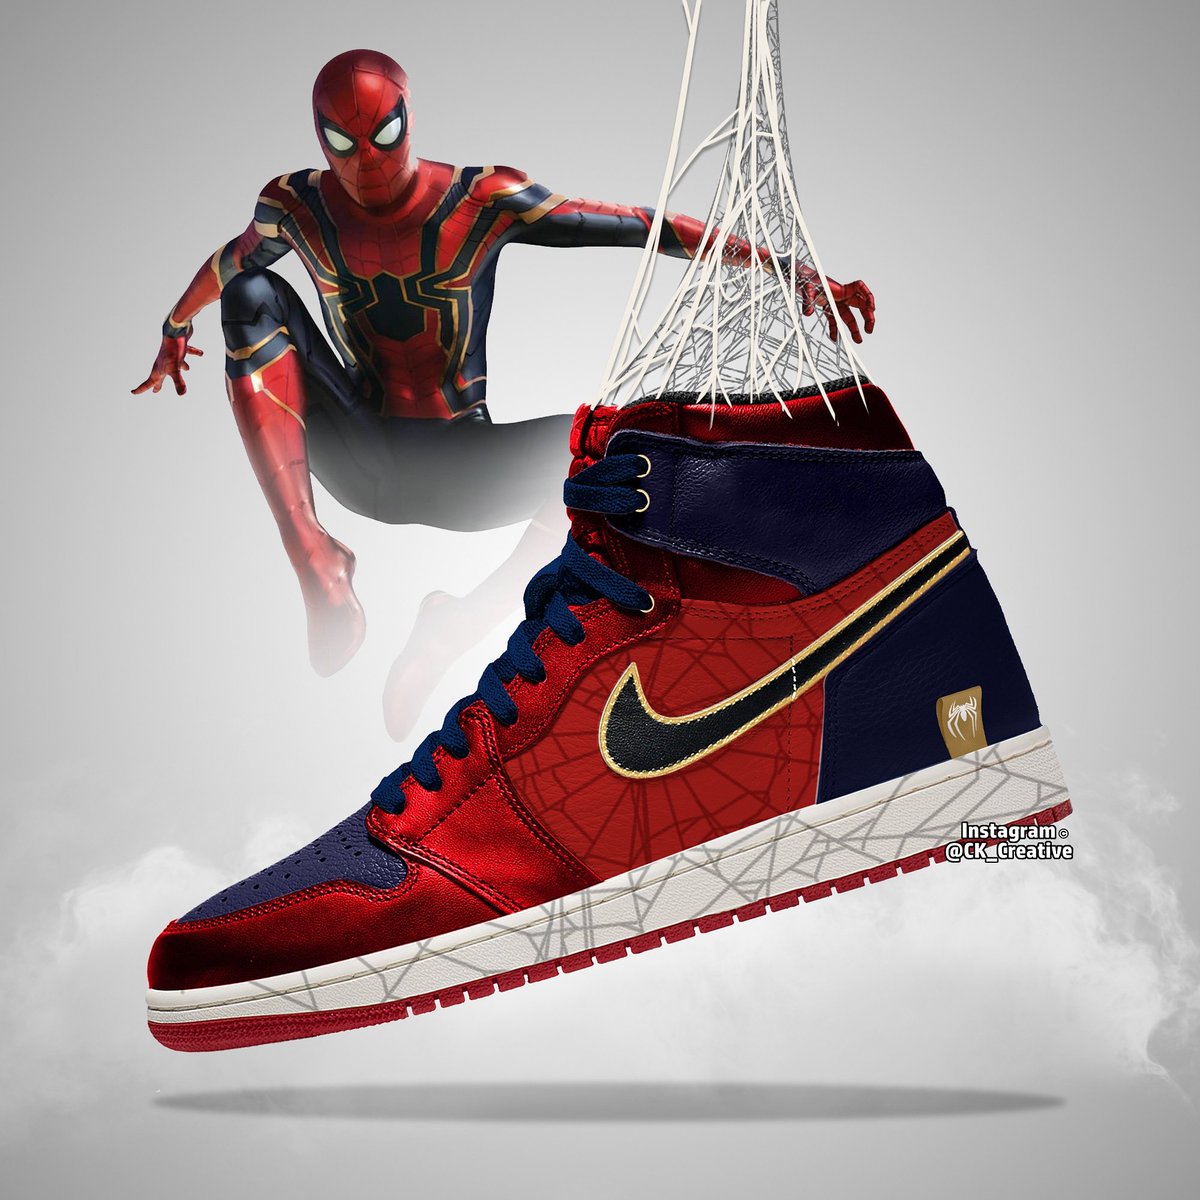 rock Pepino válvula Chris Kemp Creative on Twitter: "Spiderman Nike Jordan Design  #avengersendgame #avengers #endgame #spiderman #SpiderVerse  #SpiderManFarFromHome #nile #nikejordans https://t.co/FKzdg481gE" / Twitter